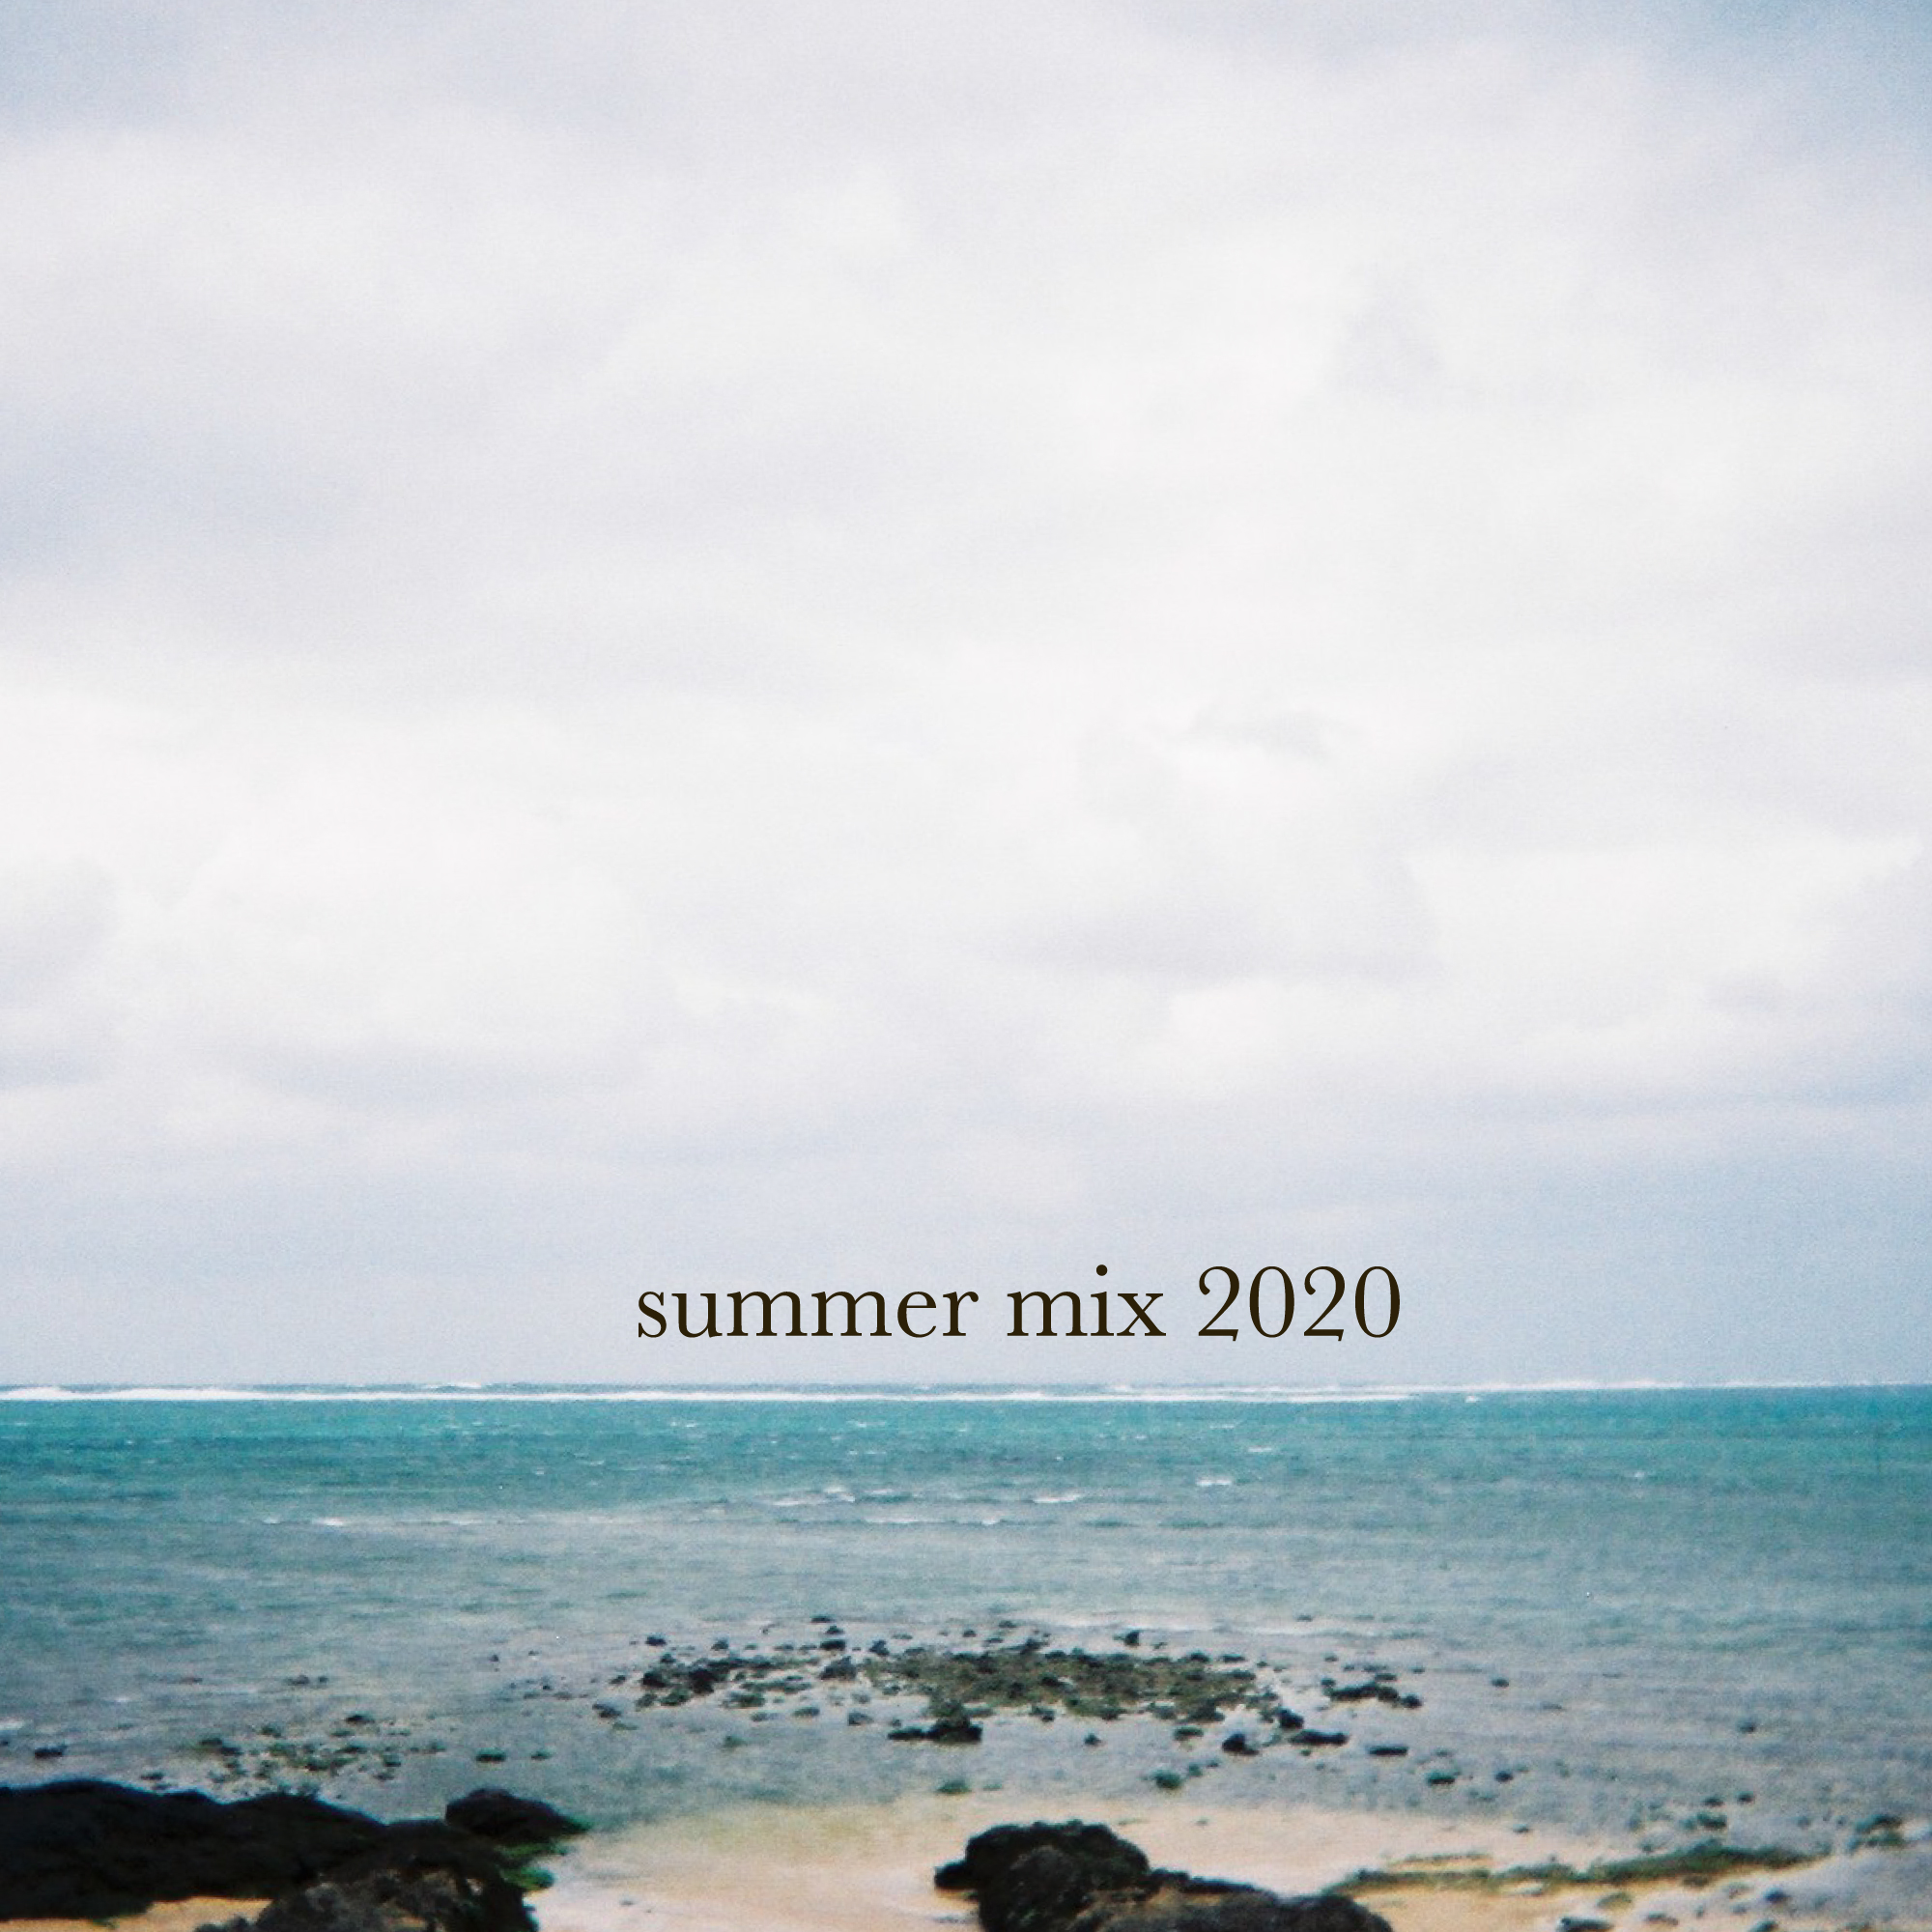 Yasu-Pacinoのnew mix"Summer Mix 2020"をアップしました